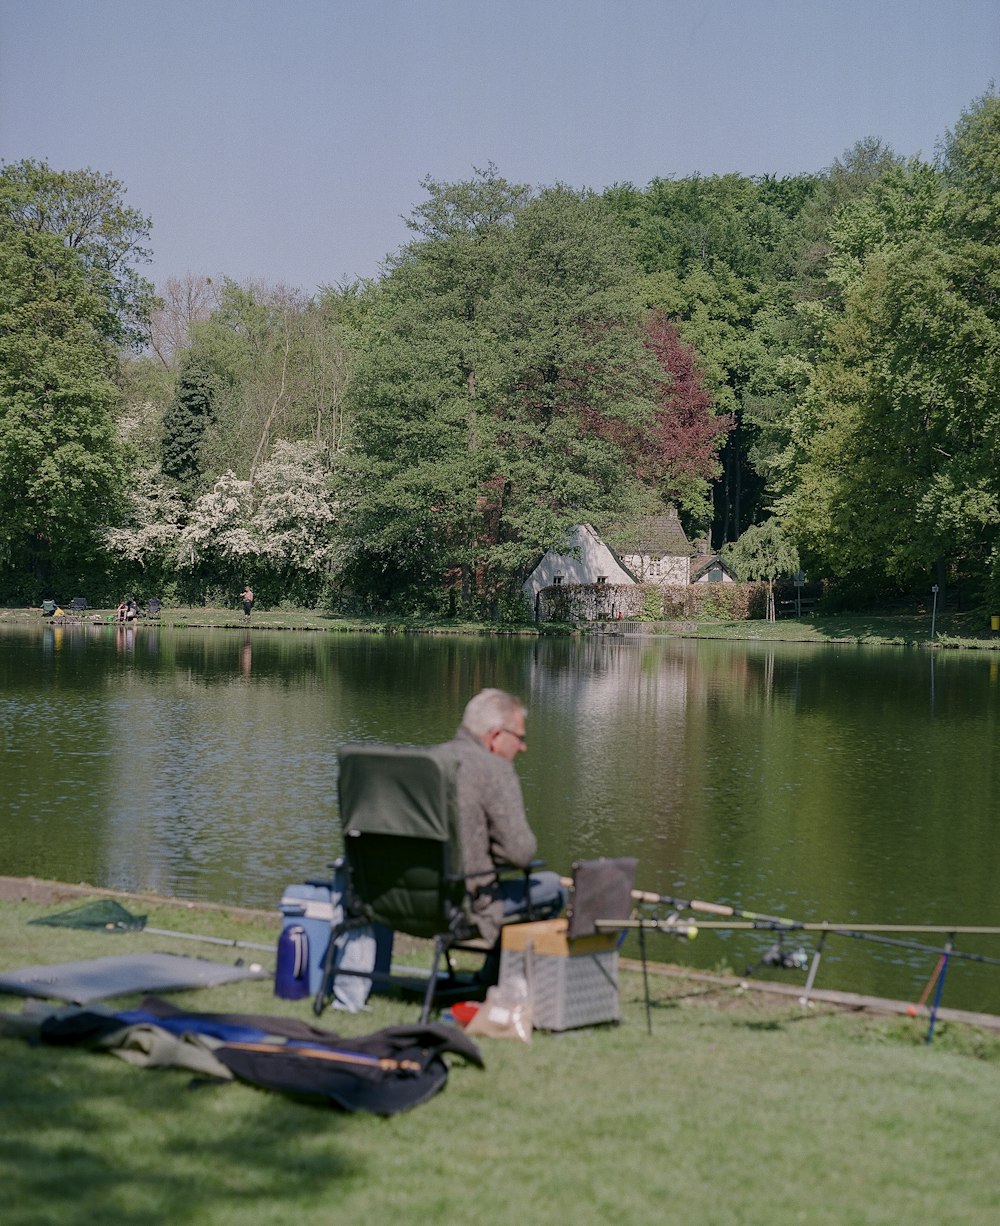 man in gray jacket sitting on green chair near lake during daytime